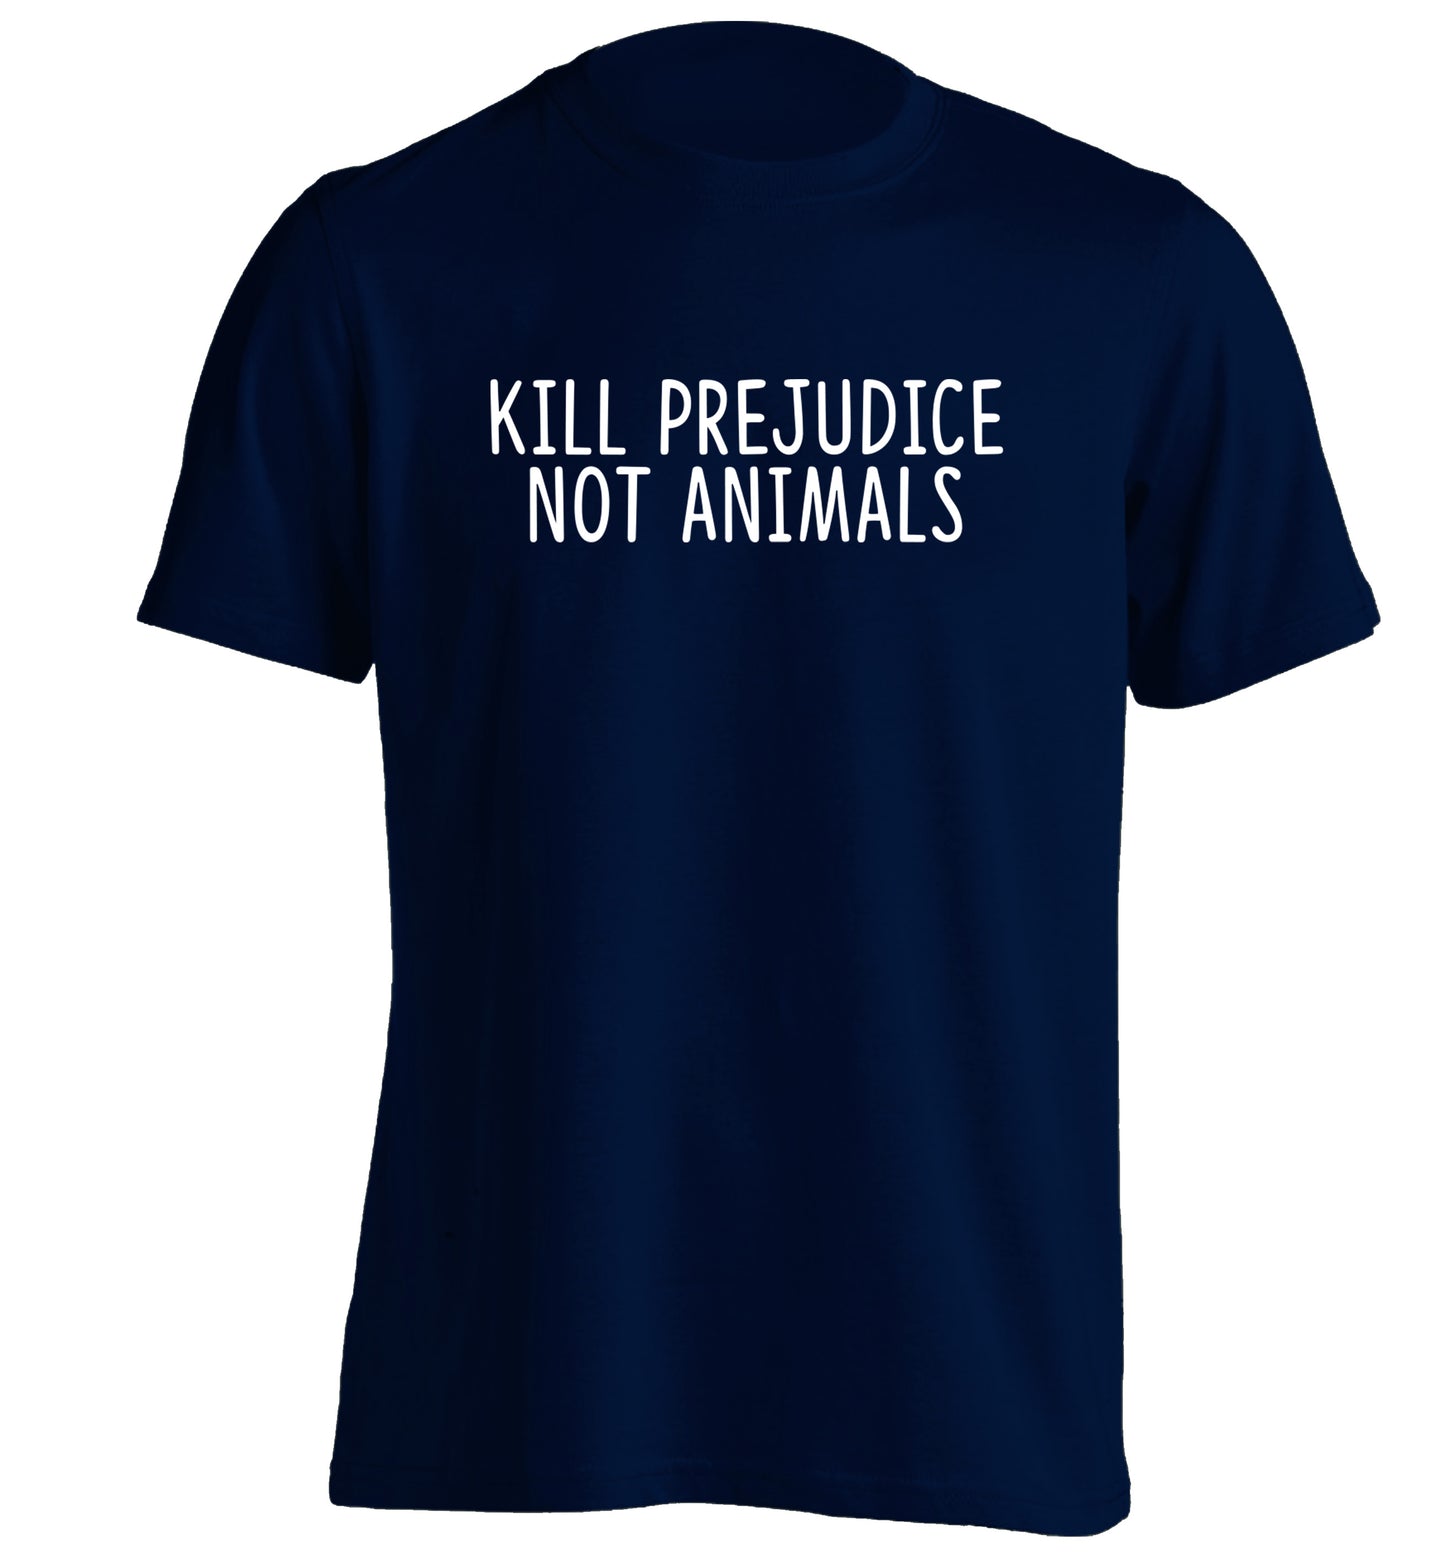 Kill Prejudice Not Animals adults unisex navy Tshirt 2XL